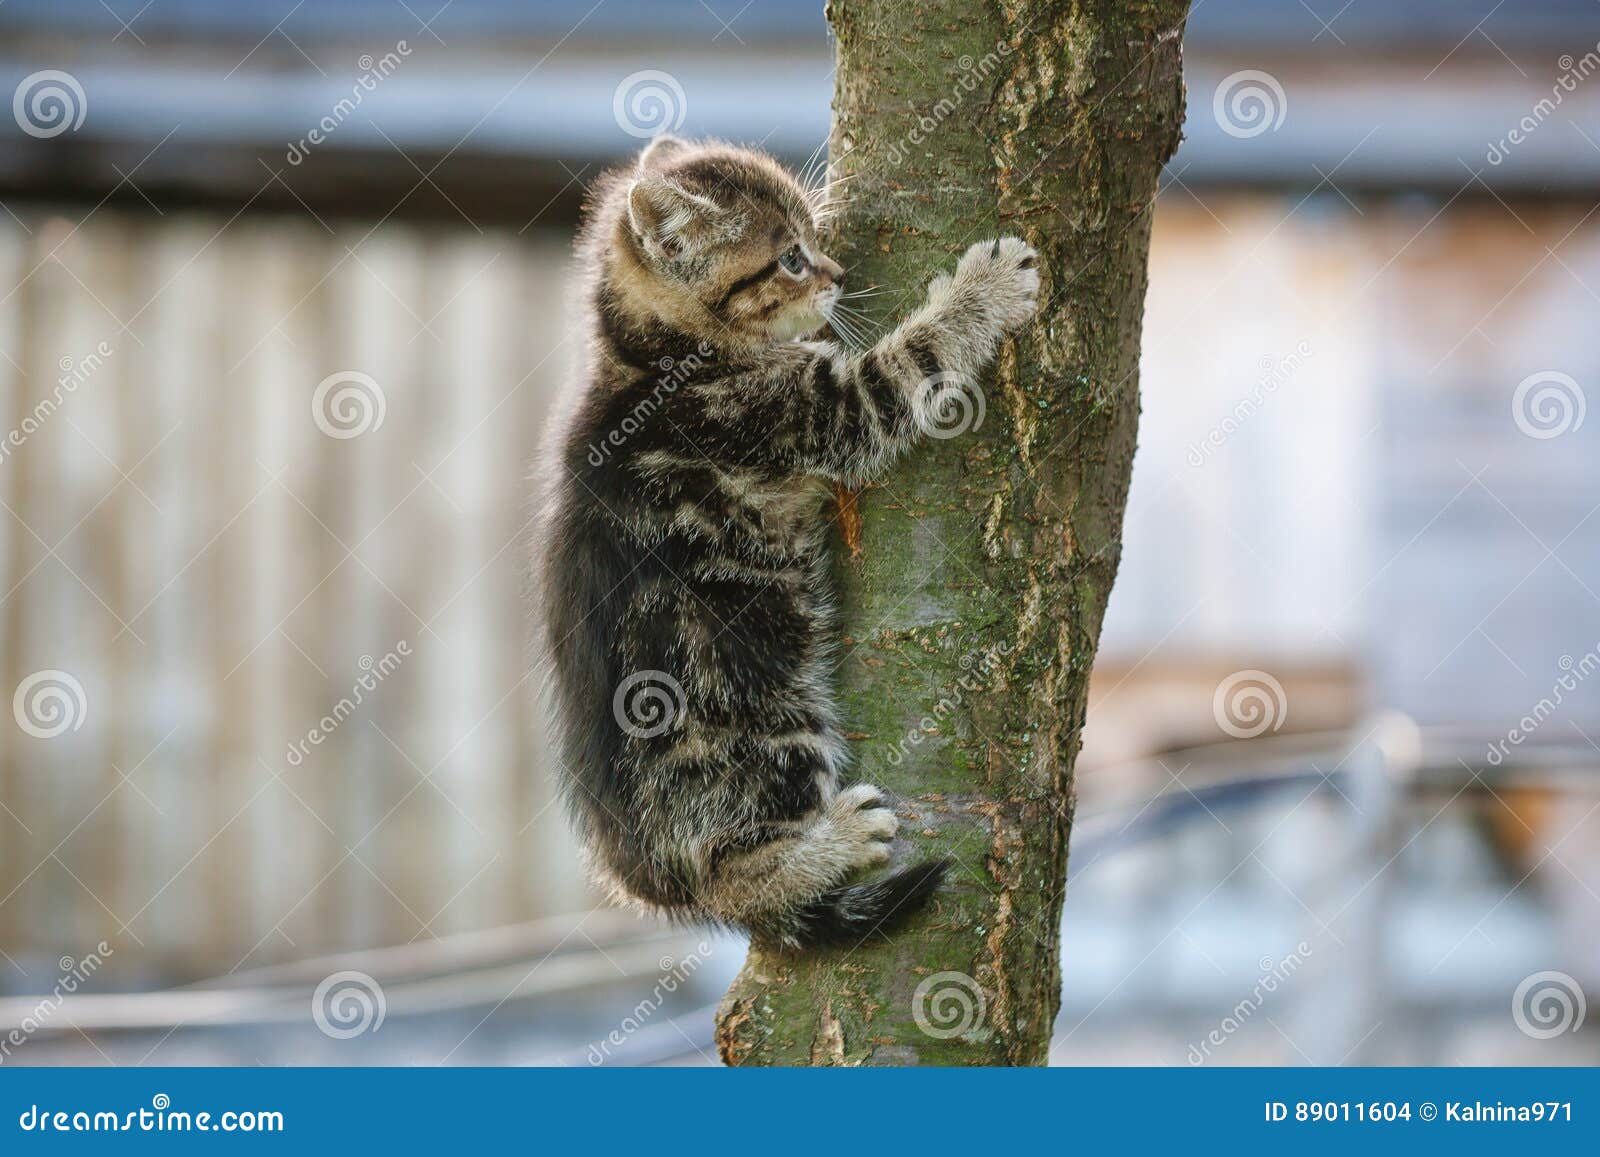 cat trying to climb a tree